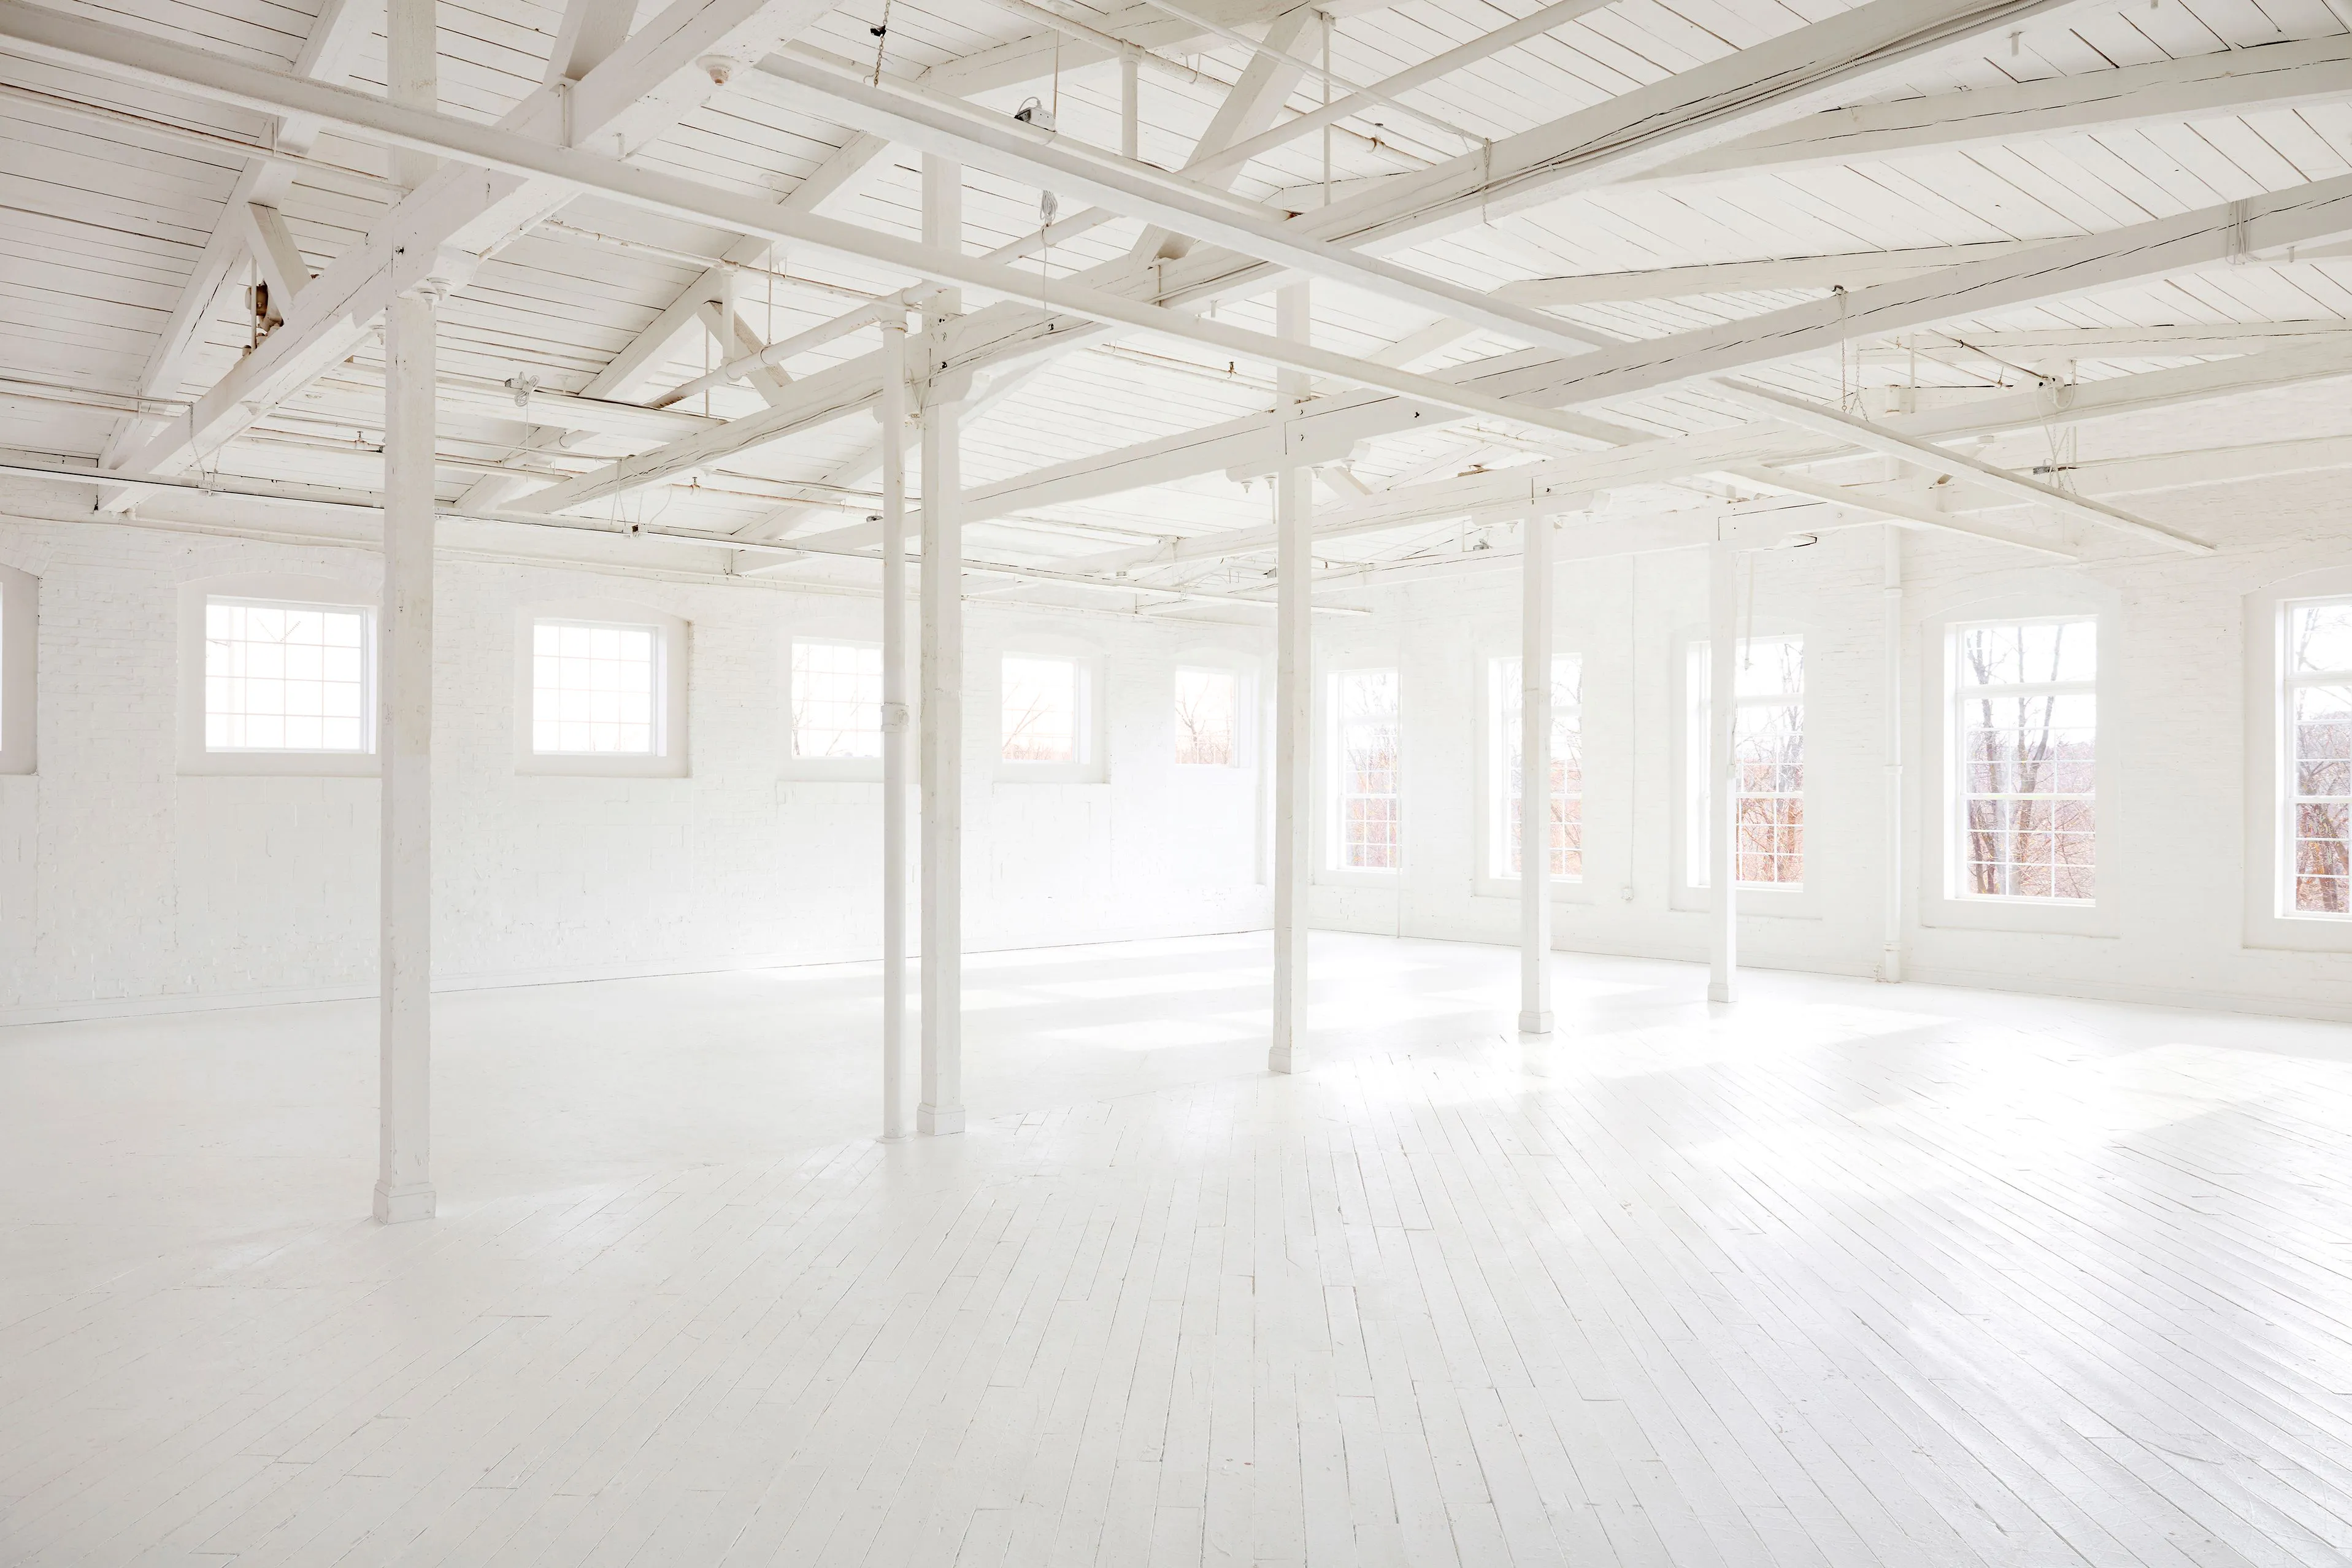 Our spacious all-white Gallery studio